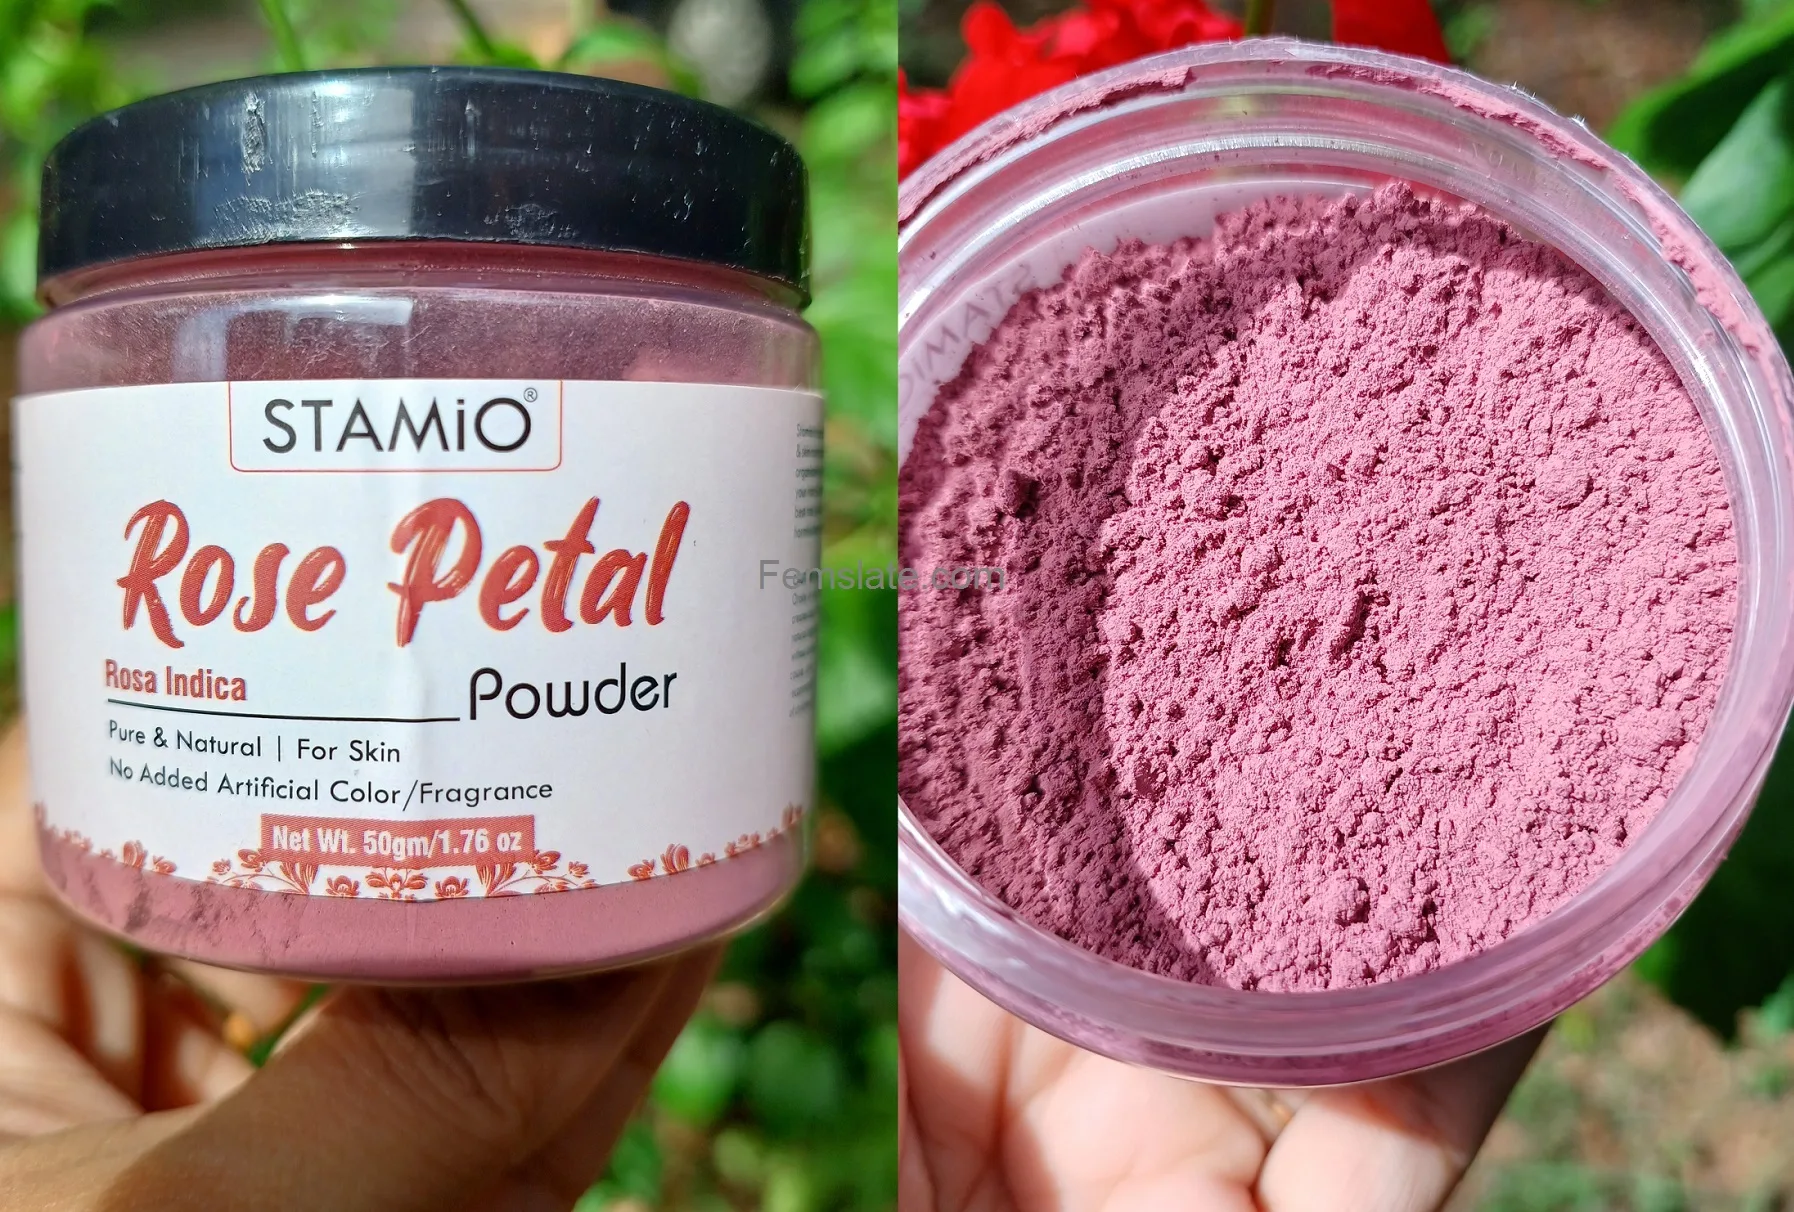 Stamio Rose Petal Powder Review